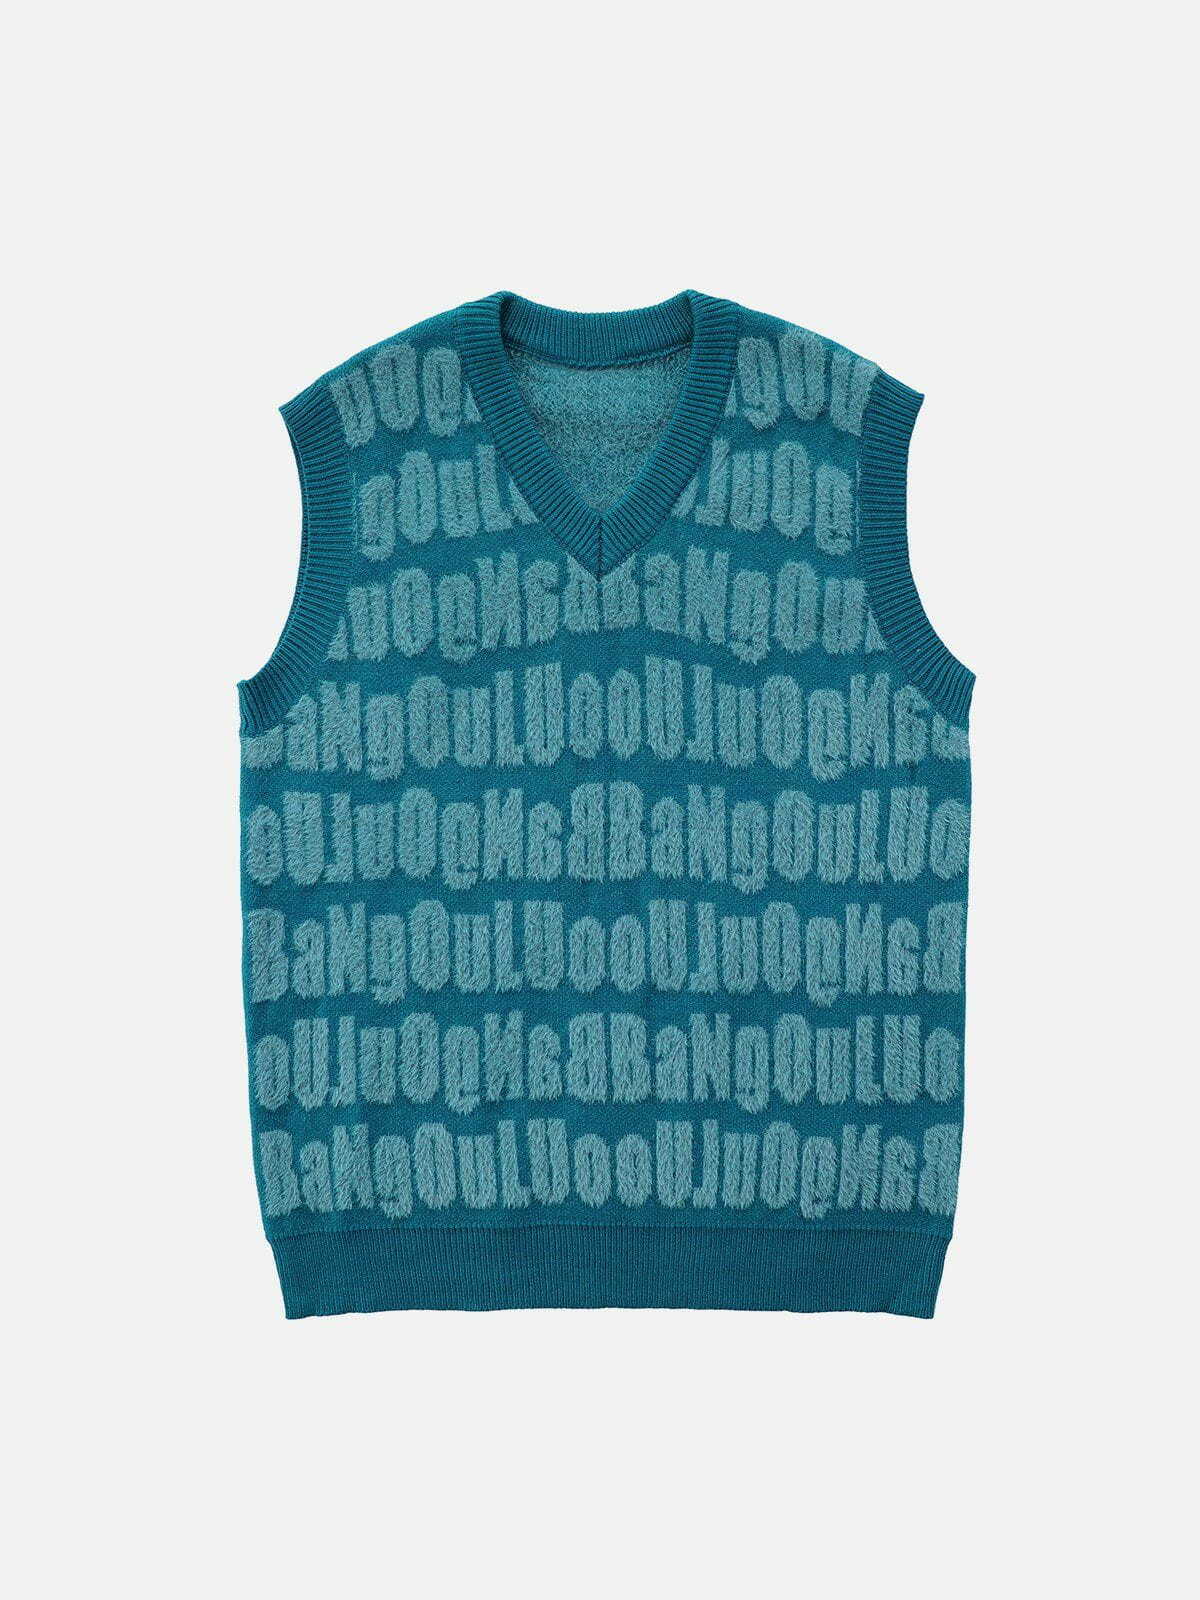 3d letter print sweater vest edgy streetwear statement 5079